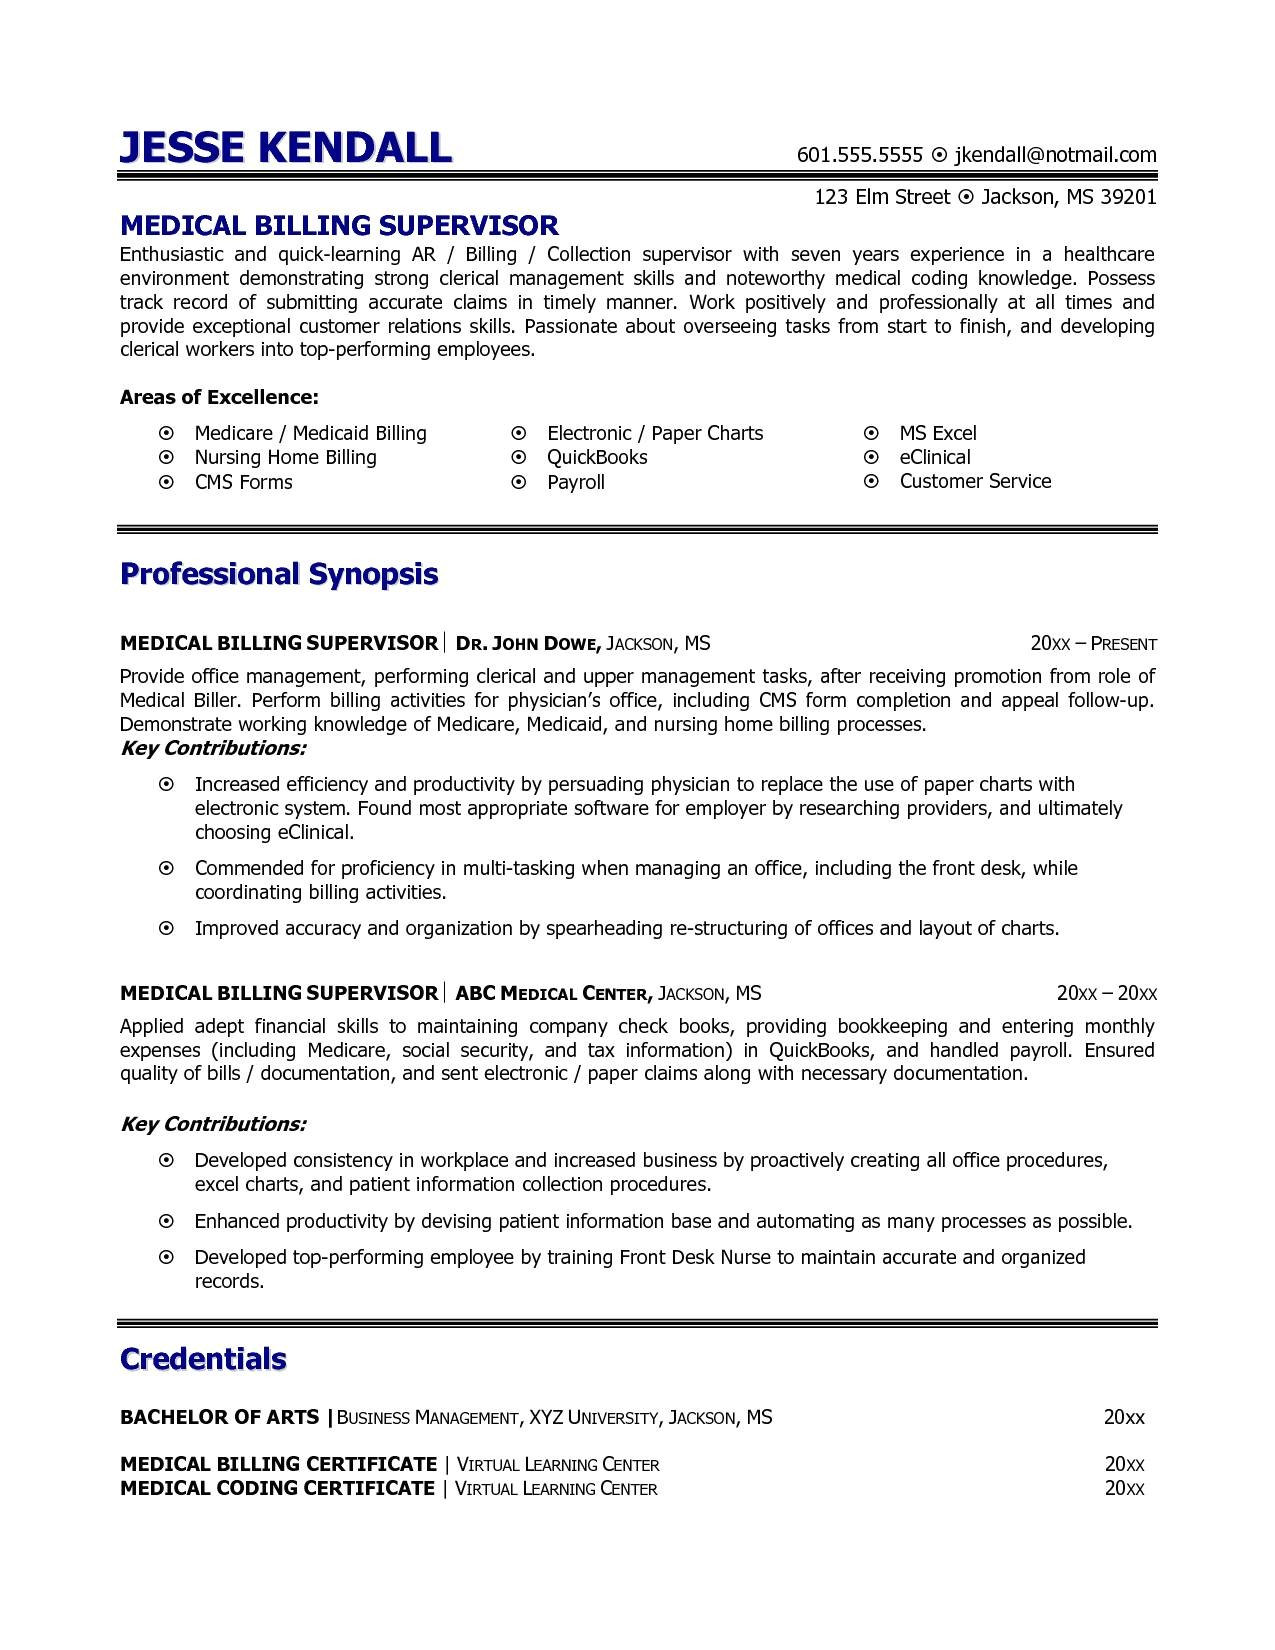 Resume format for Medical Coding Job 11 Medical Billing Resume Example Collection Resume